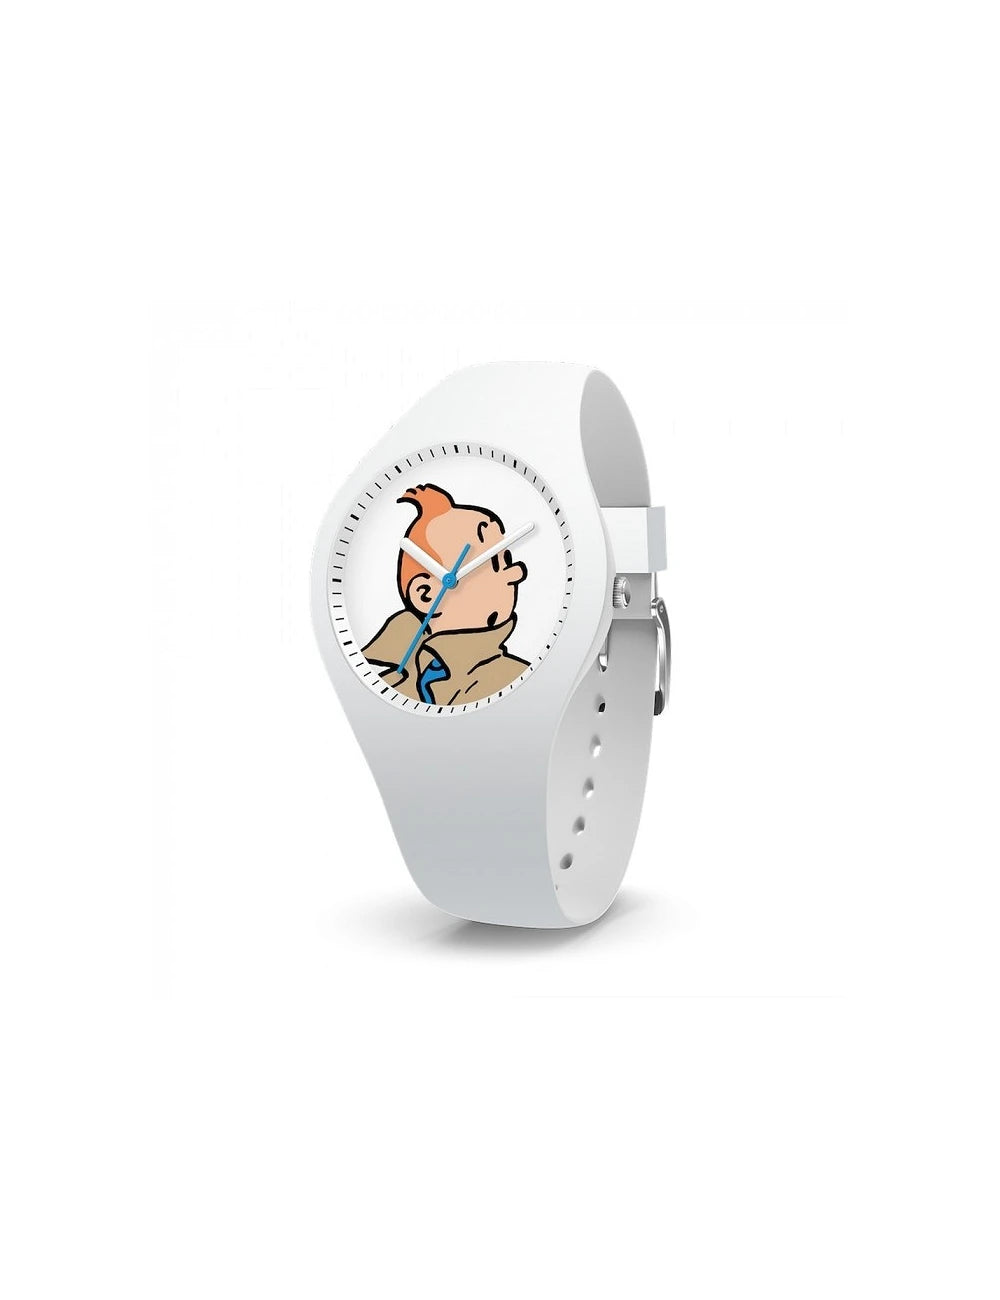 Ice Watch - Tintin & Co - Tintin - Size Small - great gift, Ice watch, Tintin Watch, Watch - Gadgetz Home